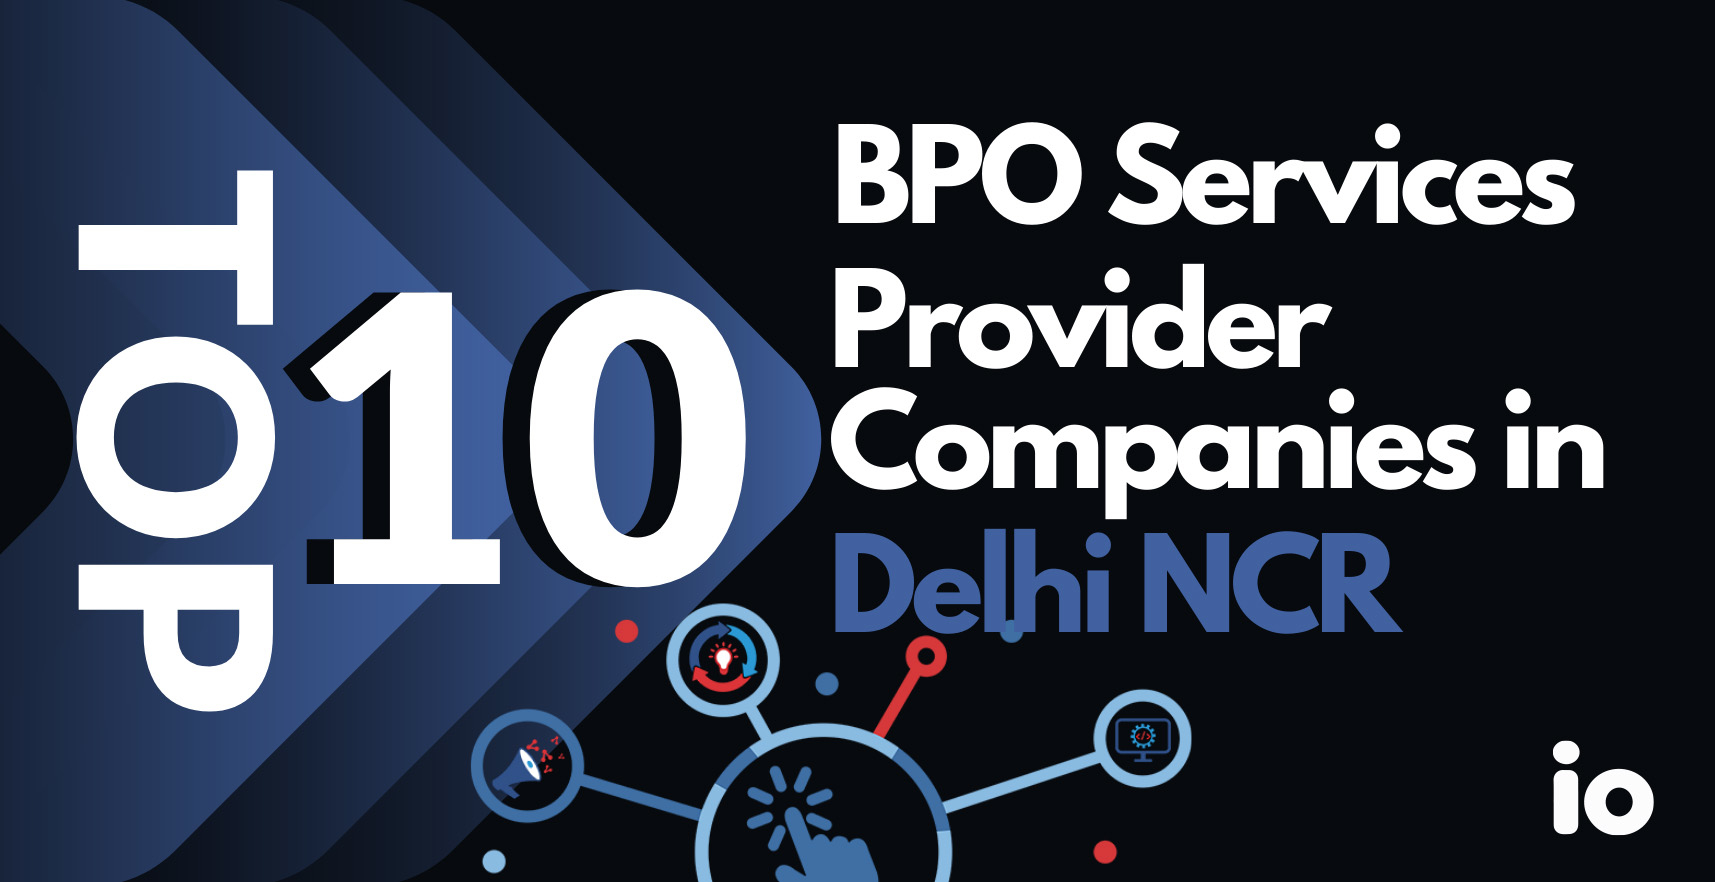 BPO service providers